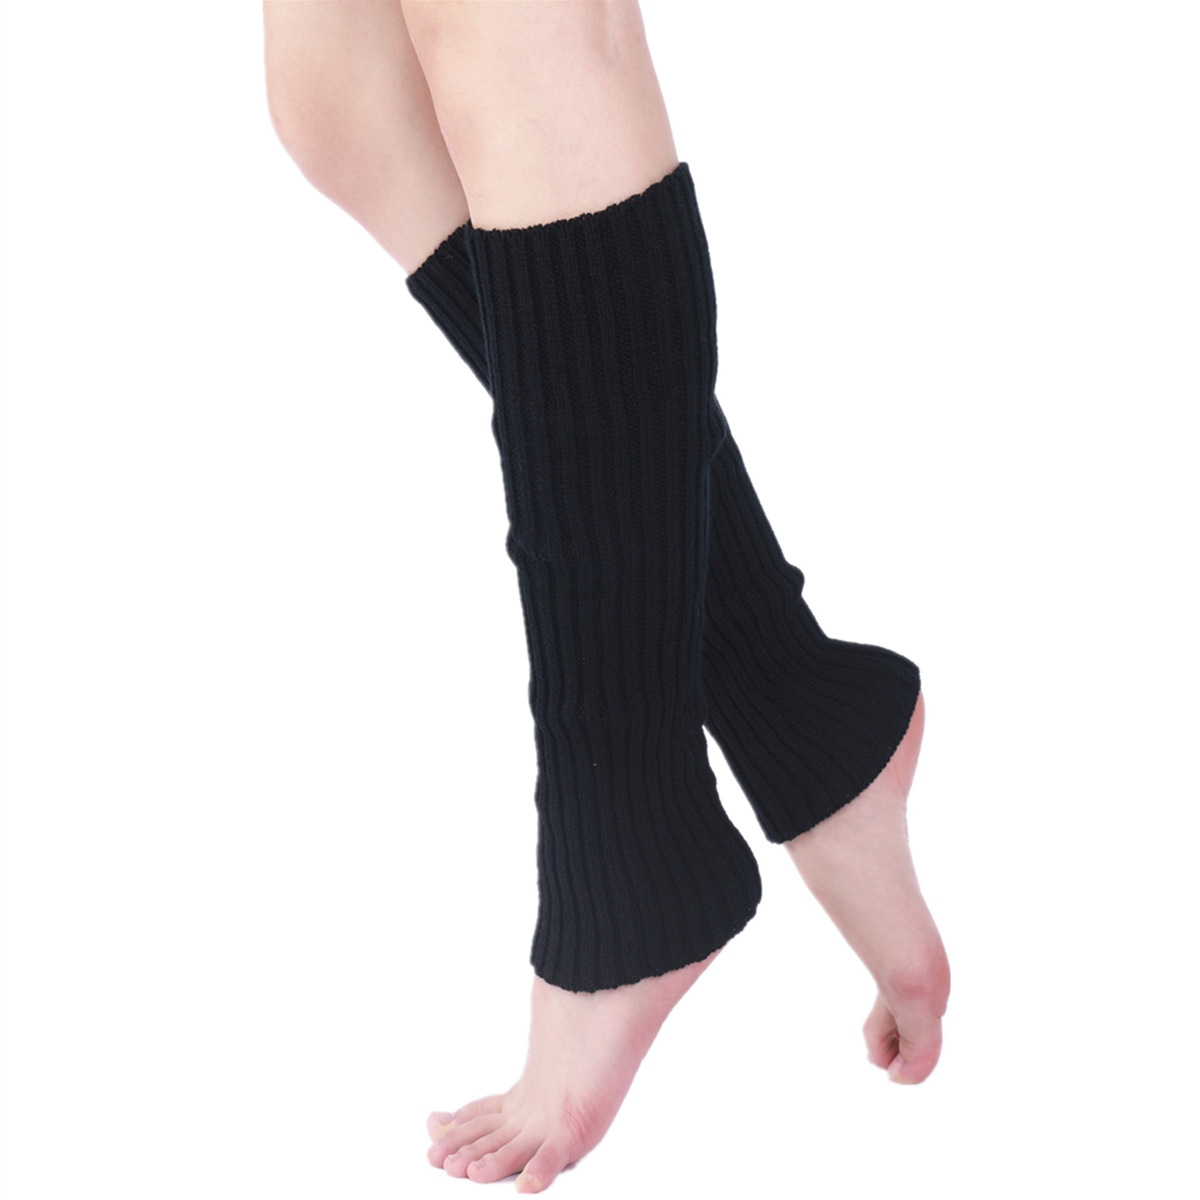 Bouclé legwarmers, Simons, Women's Leg Warmers: Shop Online in Canada